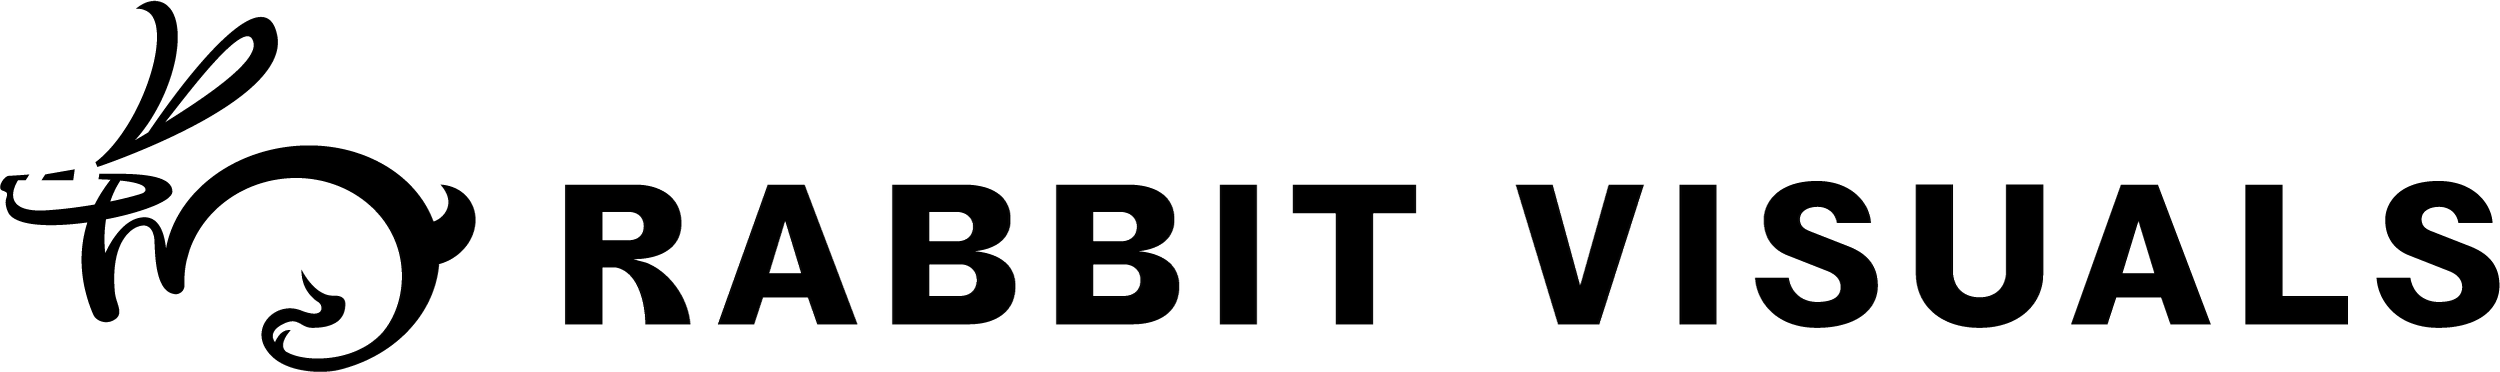 Logo-RABBITVISUALS-and-Bunny-horizontal-black-2021-web.png